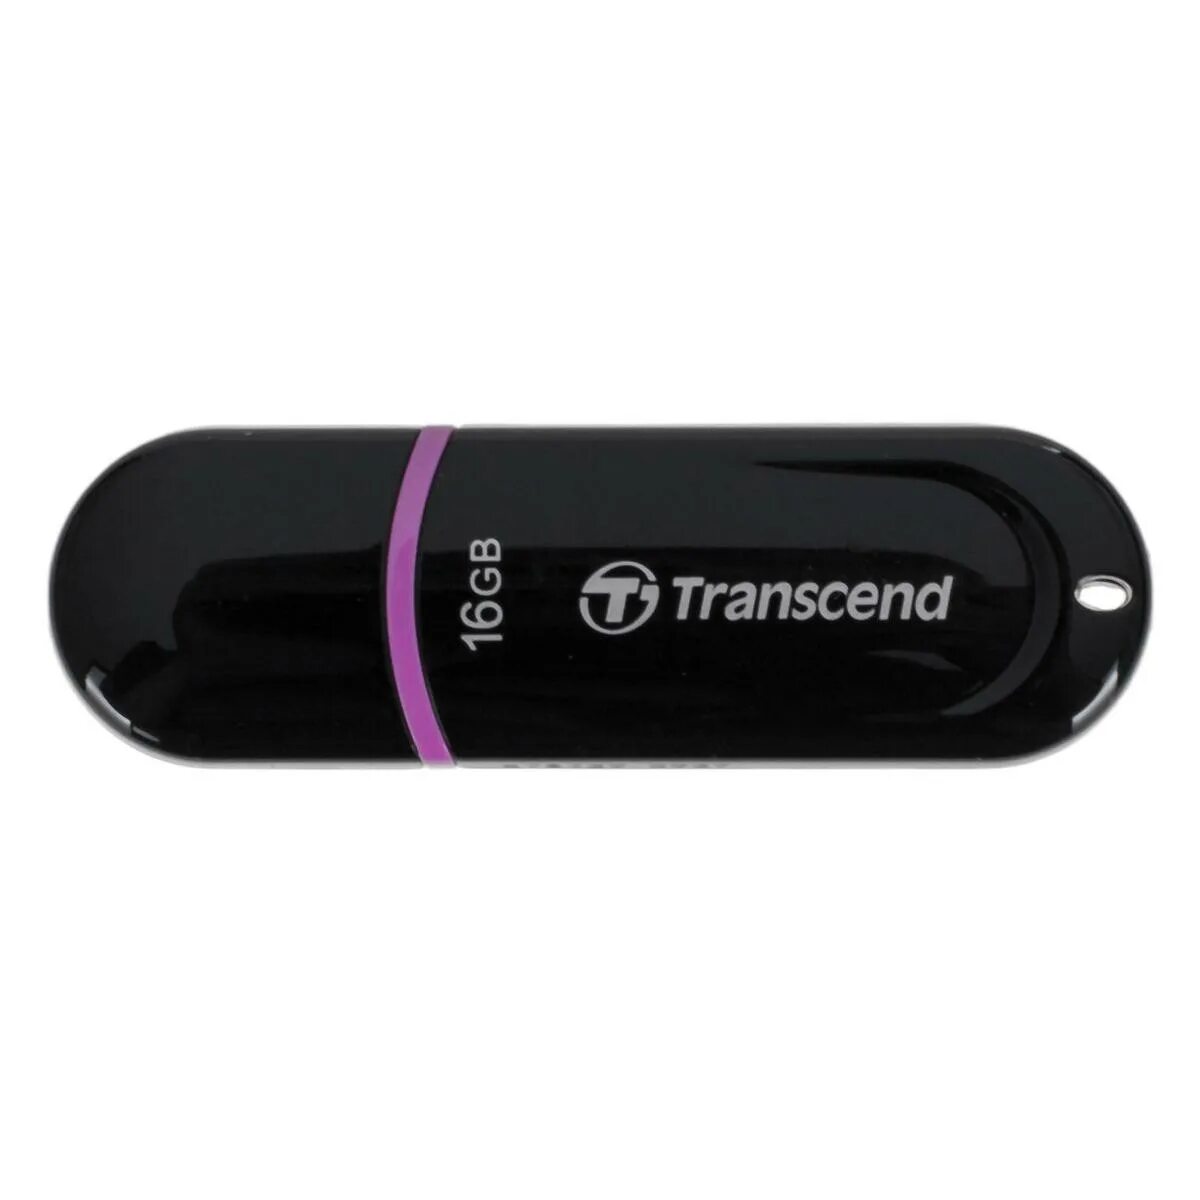 USB Transcend 16gb. Флешка 16 ГБ Transcend. Флешка Transcend 4 ГБ. Флешка Transcend 16gb металлическая. Восстановление флешки transcend